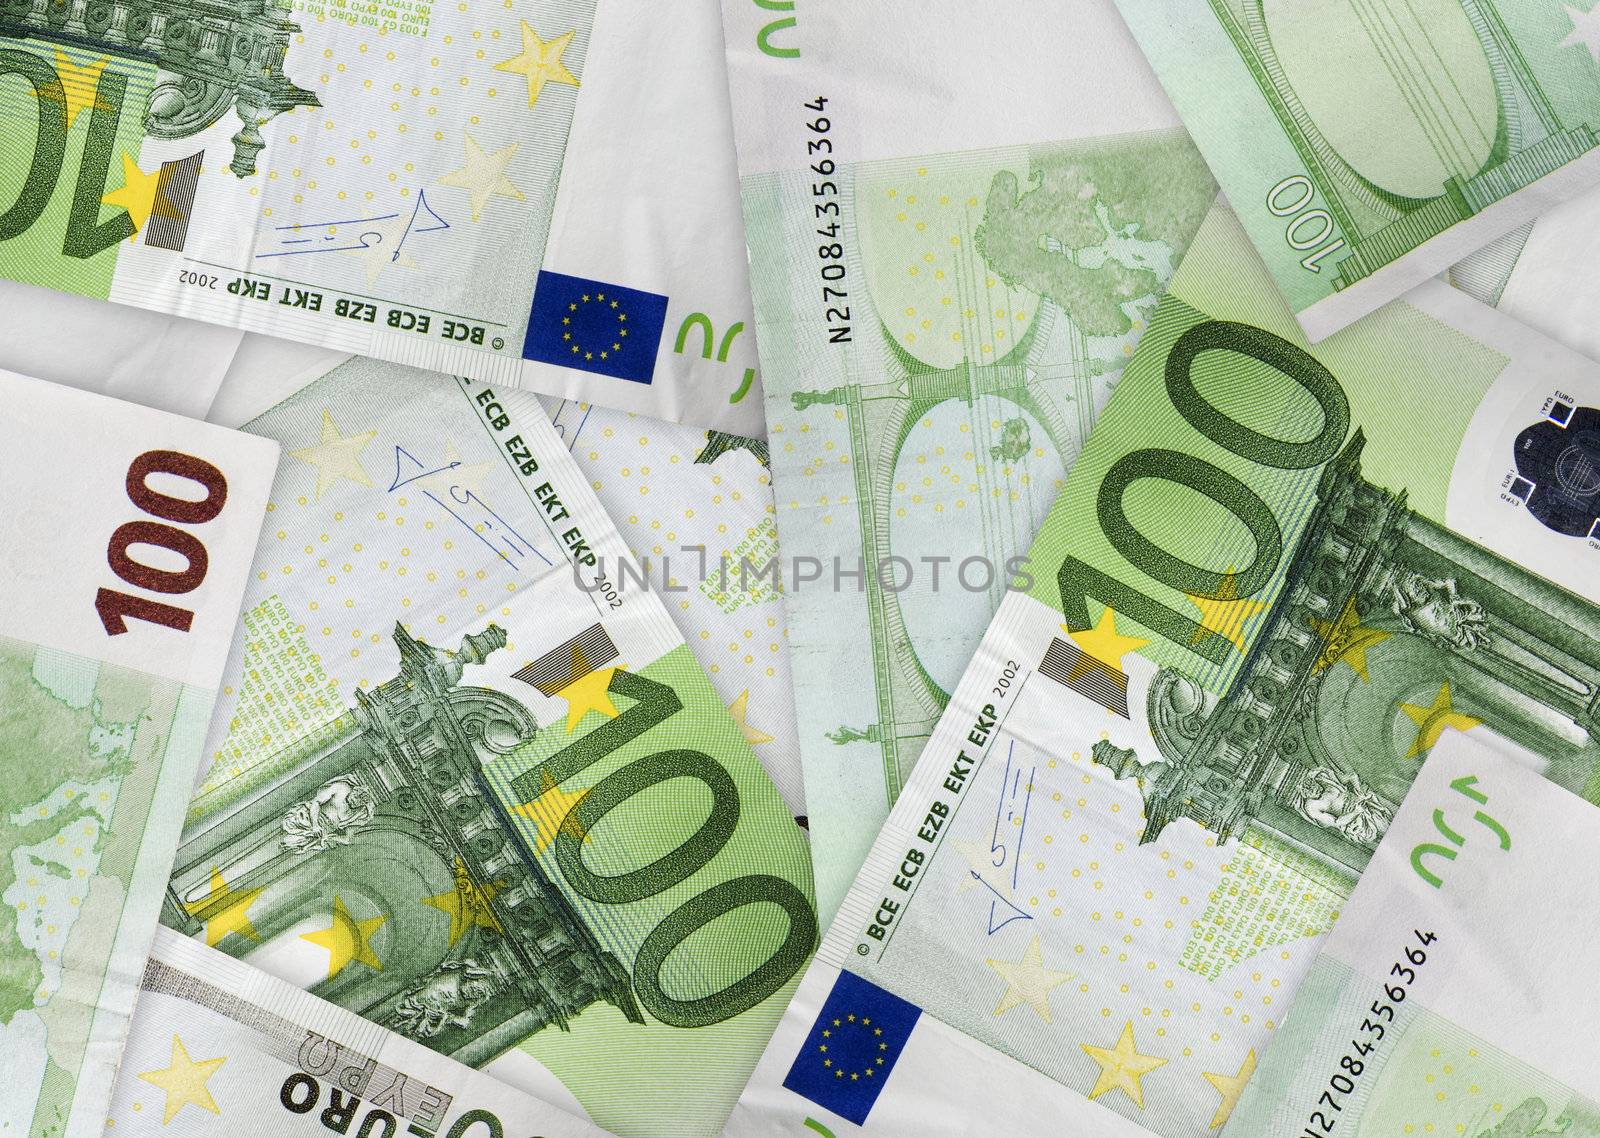 Lot of European Union money, currency Euro.

Studio shot, composite.